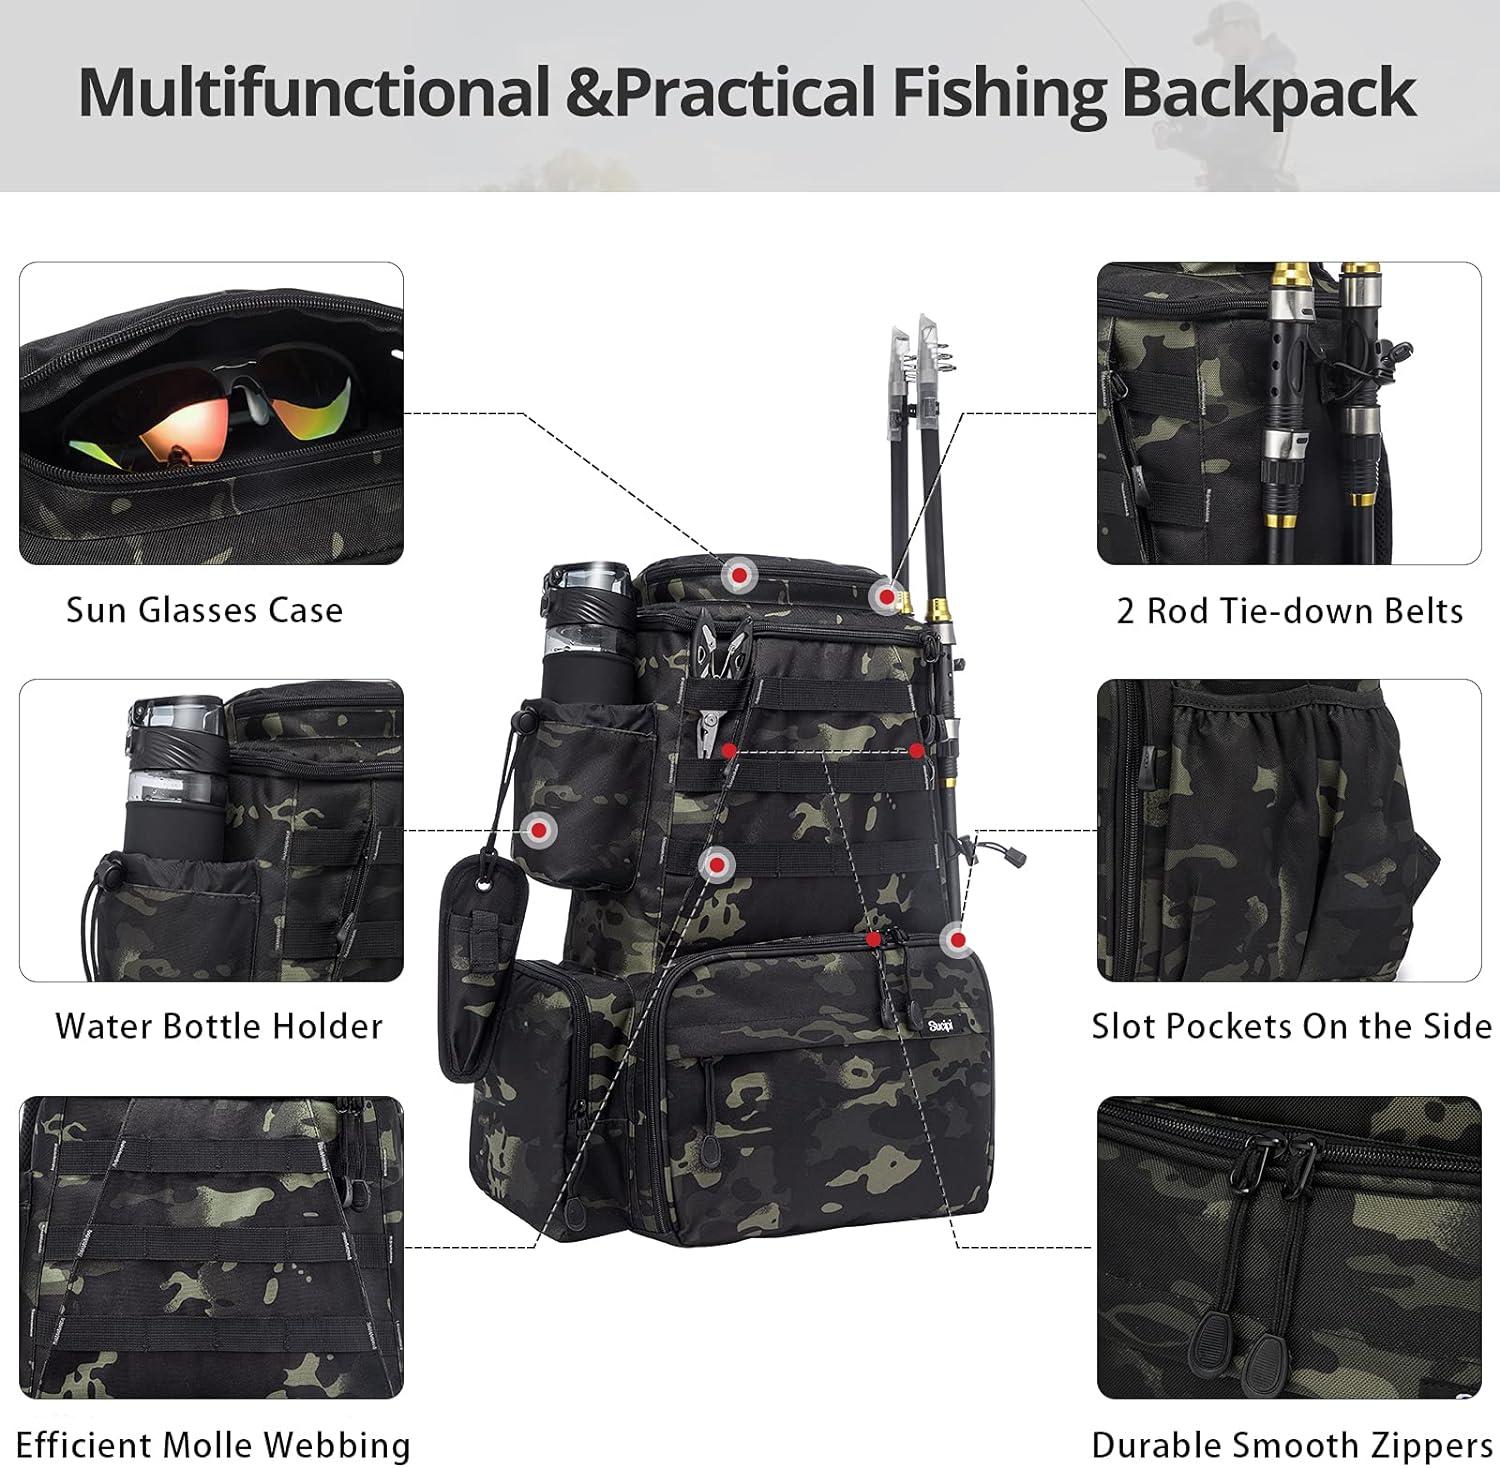  Rodeel Fishing Tackle Backpack 2 Fishing Rod Holders